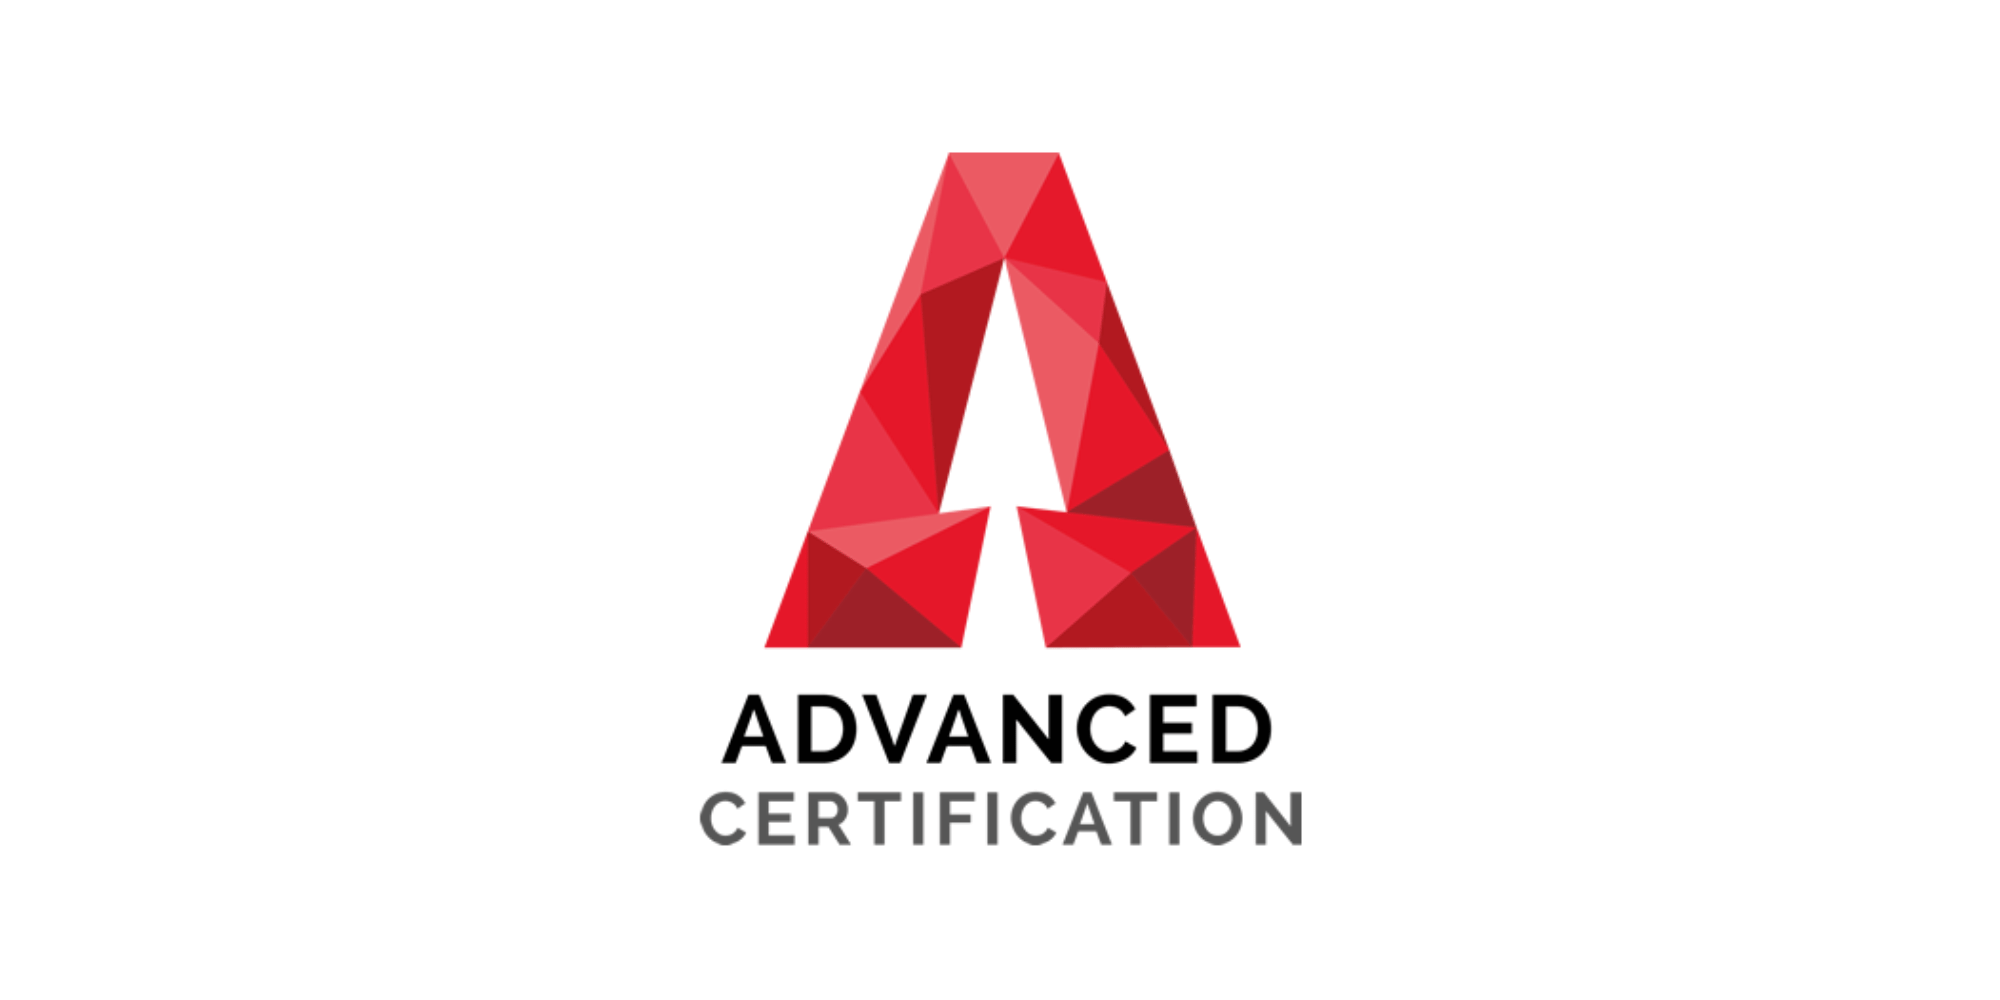 Advanced Certification Amtivo Group